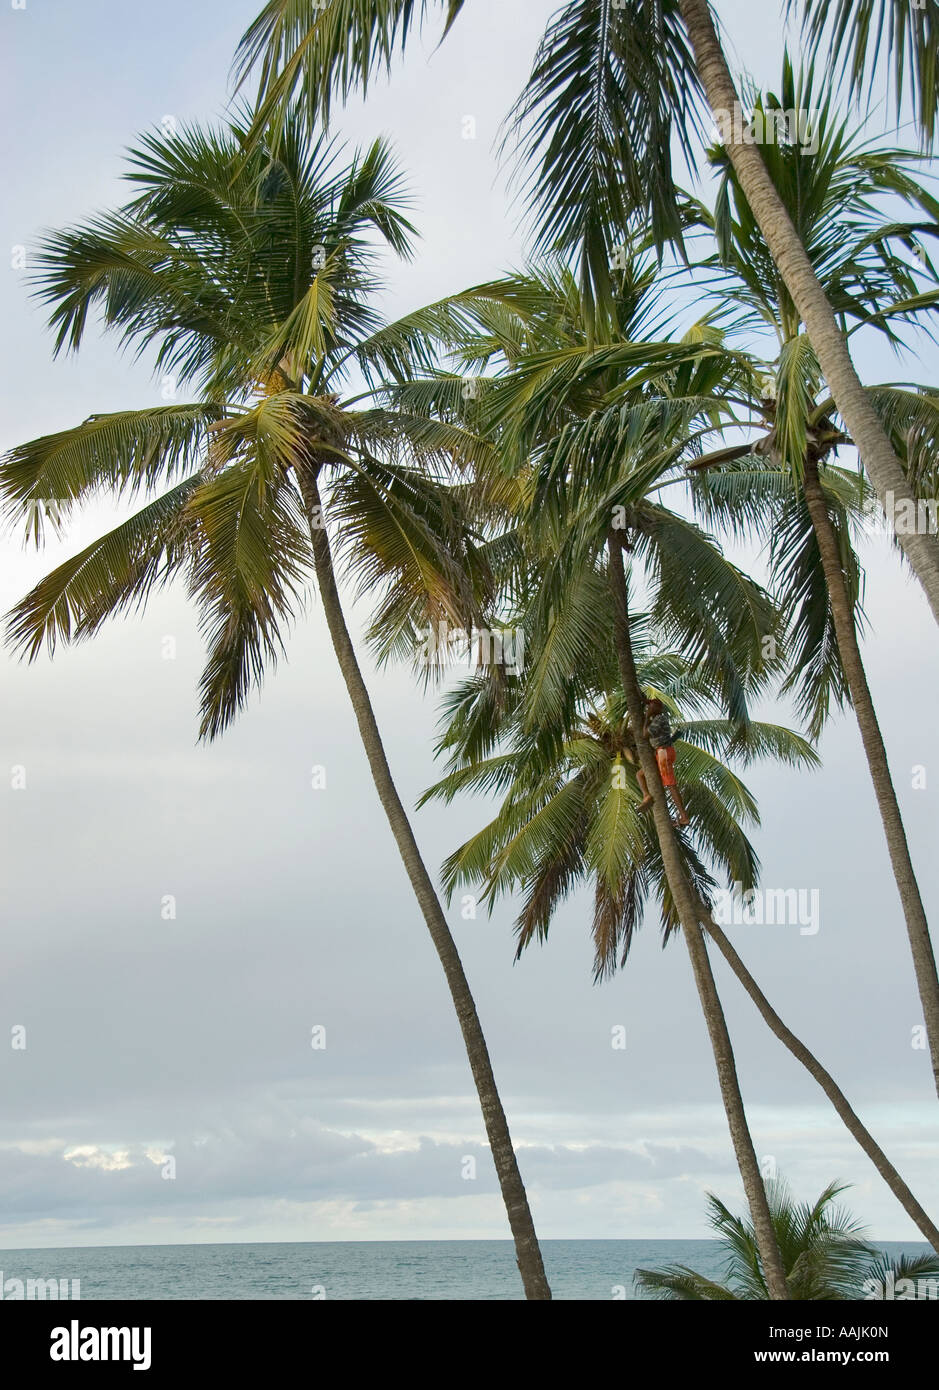 Man climbing Coconut palm tree (Cocos nucifera Stock Photo - Alamy